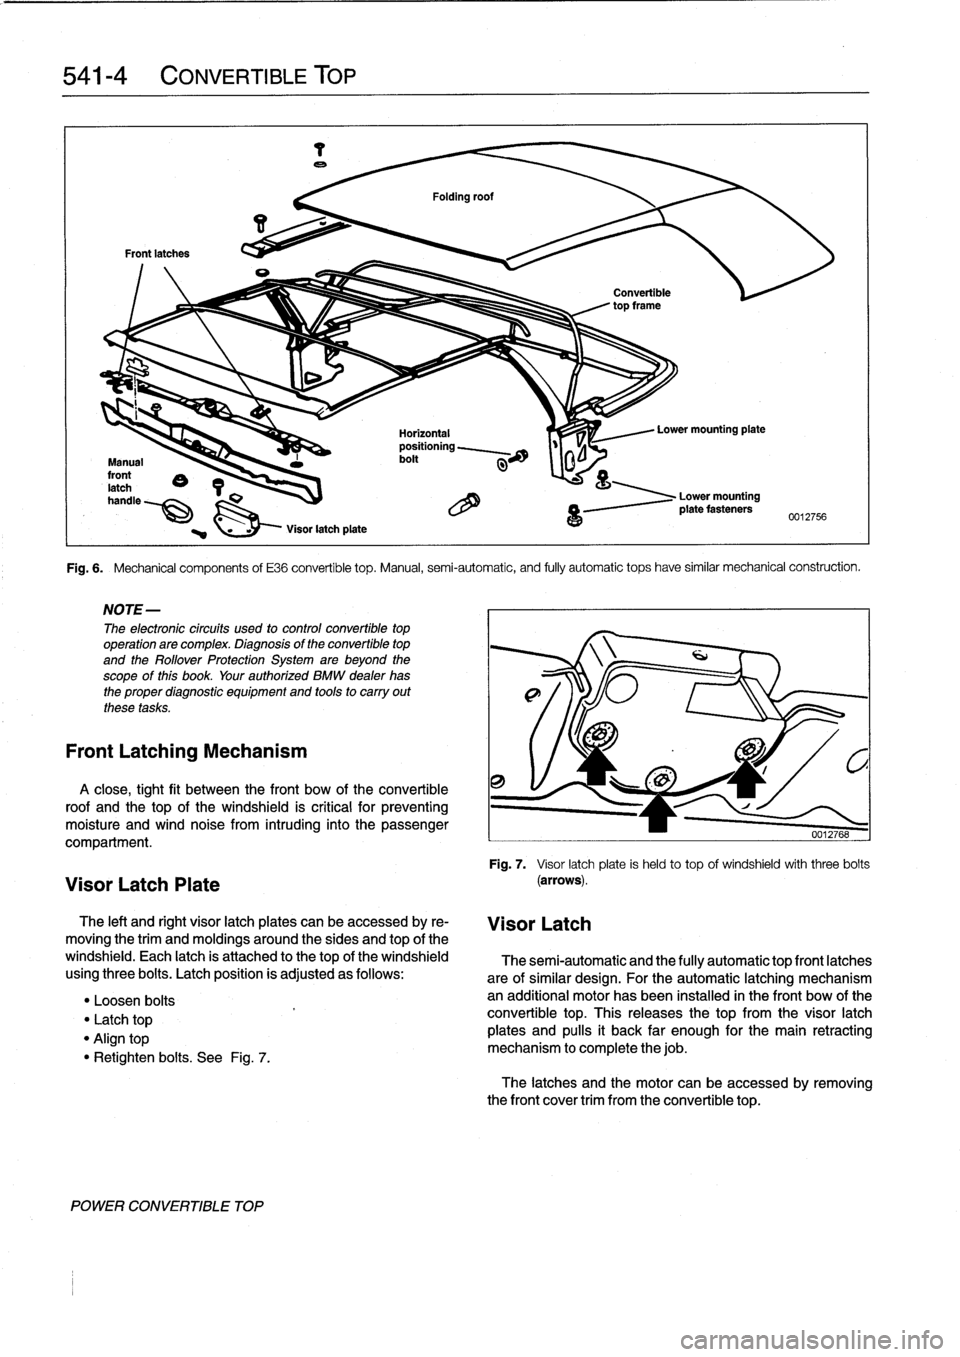 BMW 318i 1996 E36 Service Manual 
541-
4

	

CONVERTIBLE
TOP

Folding
roof

Frontlatches

Convertible
topframe

i

Lower
mounting
pata
Horizontal
positioning
~~-
bolt
Manual
front
8
e
latch

	

1
handle

~

	

O

Visor
latchplata

Fi